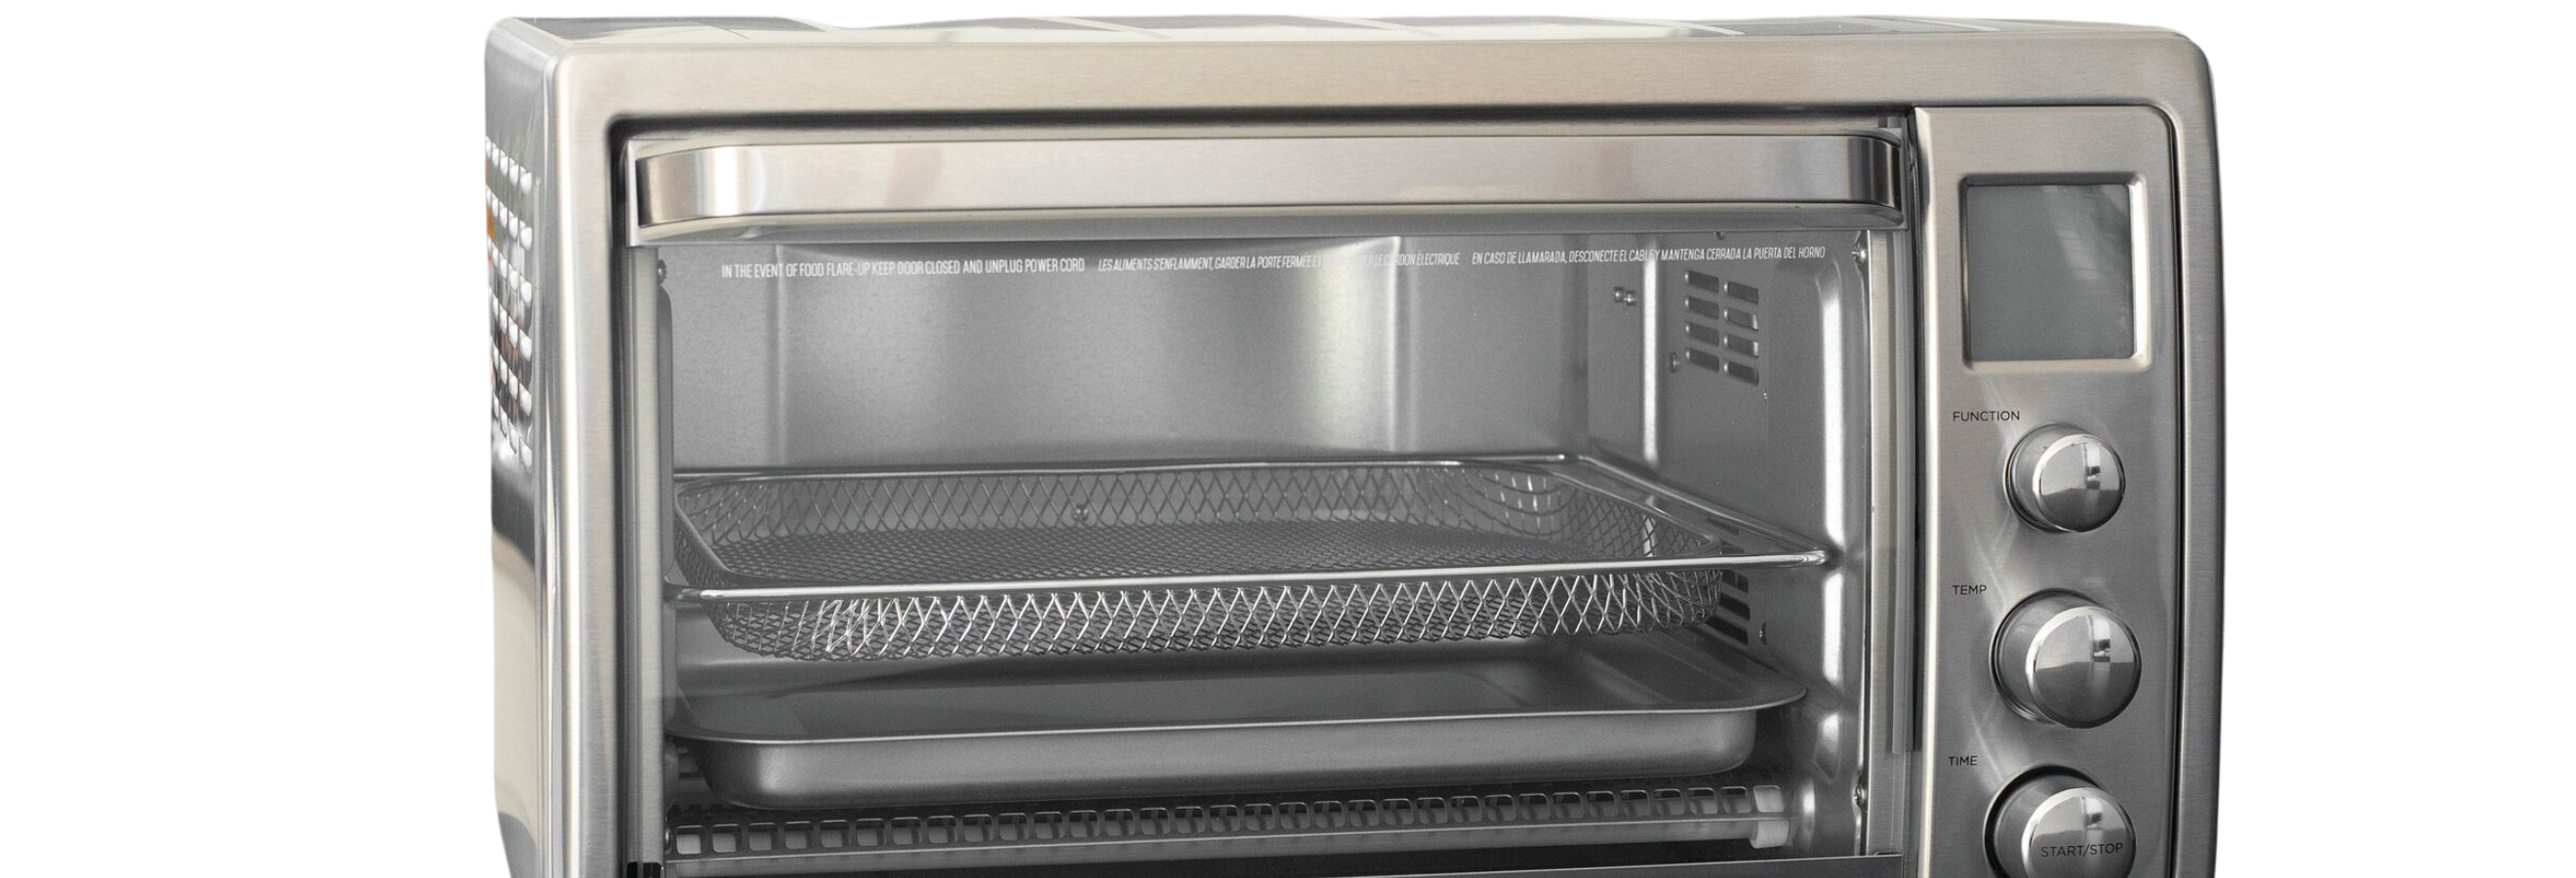 Black+Decker Crisp 'N Bake TOD5035SS Toaster & Toaster Oven Review